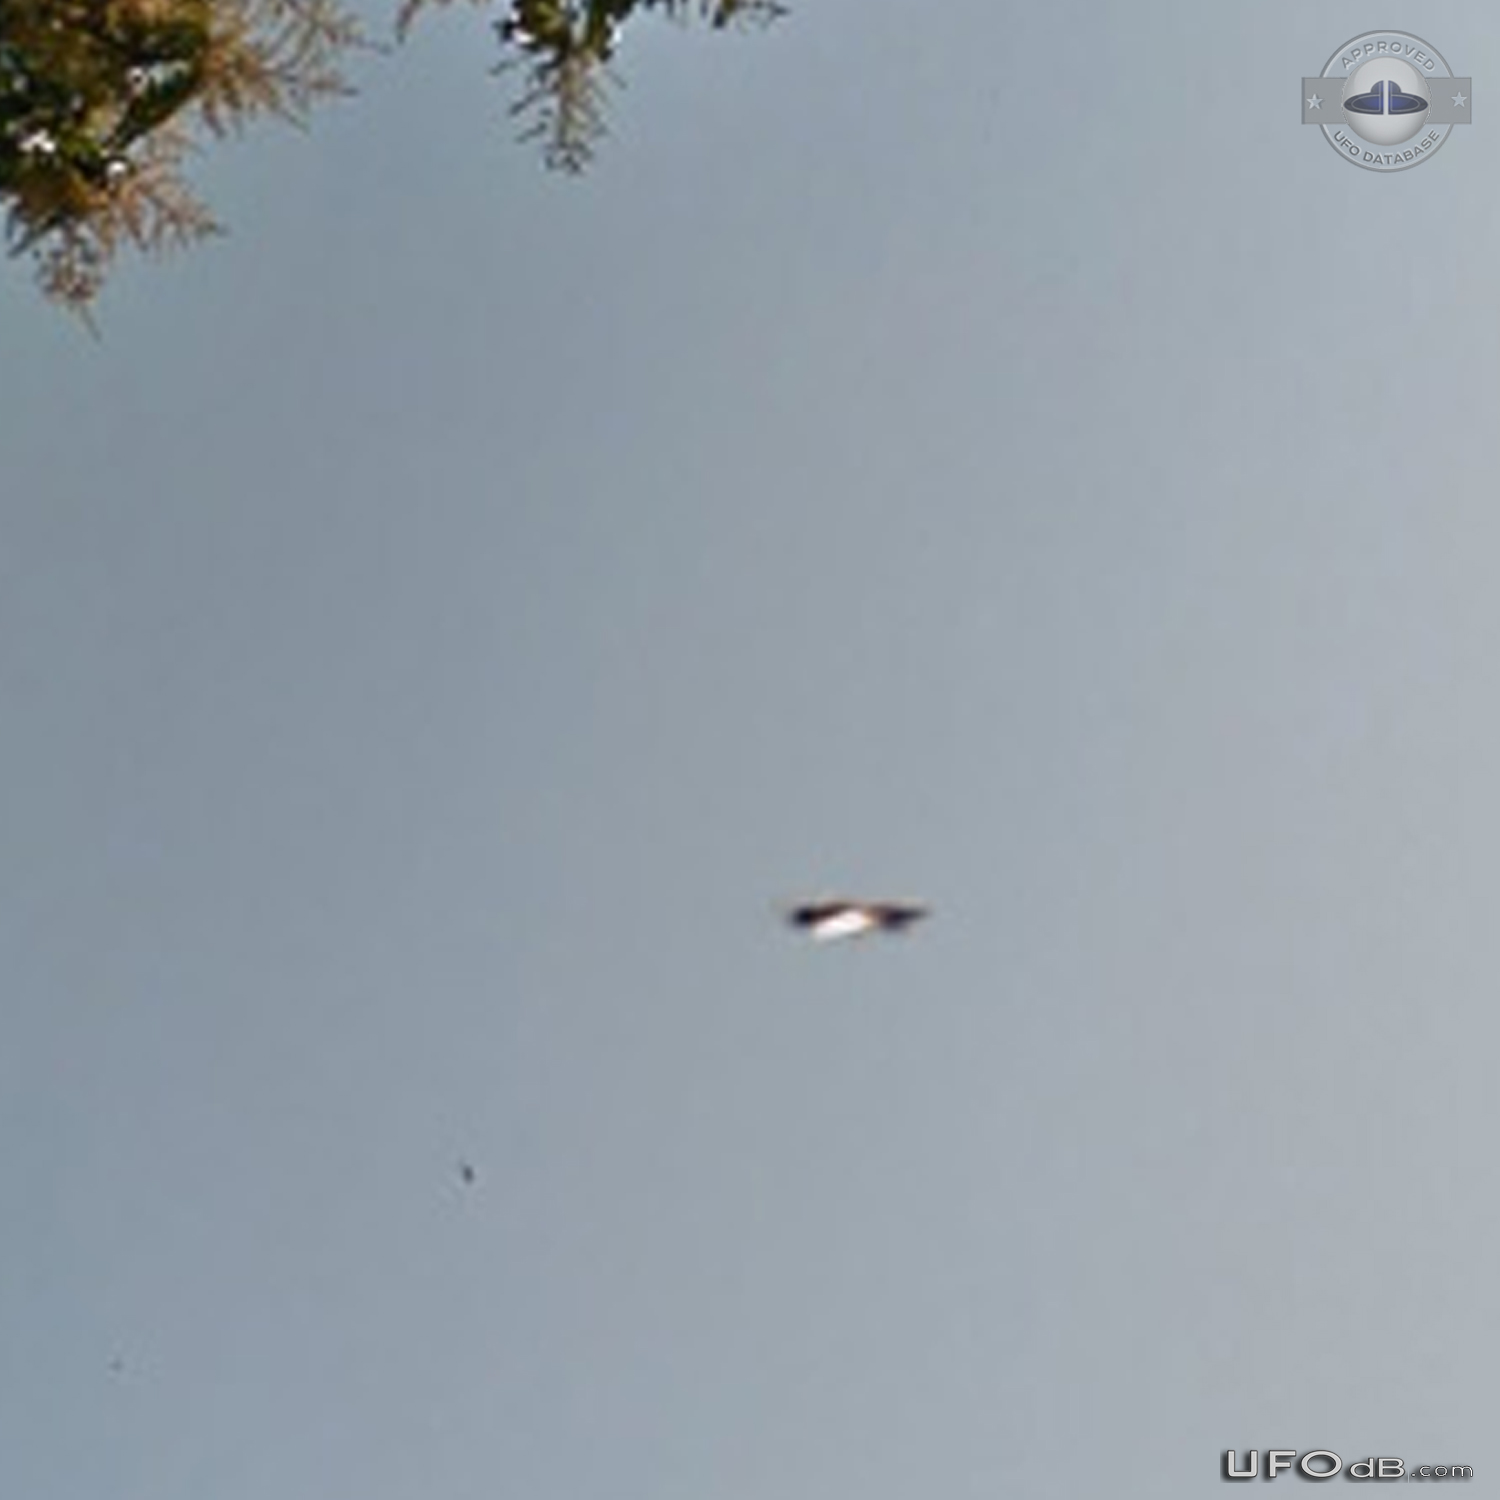 Metallic UFO flying over cemetery in Rio de Janeiro Brazil September 2 UFO Picture #725-3